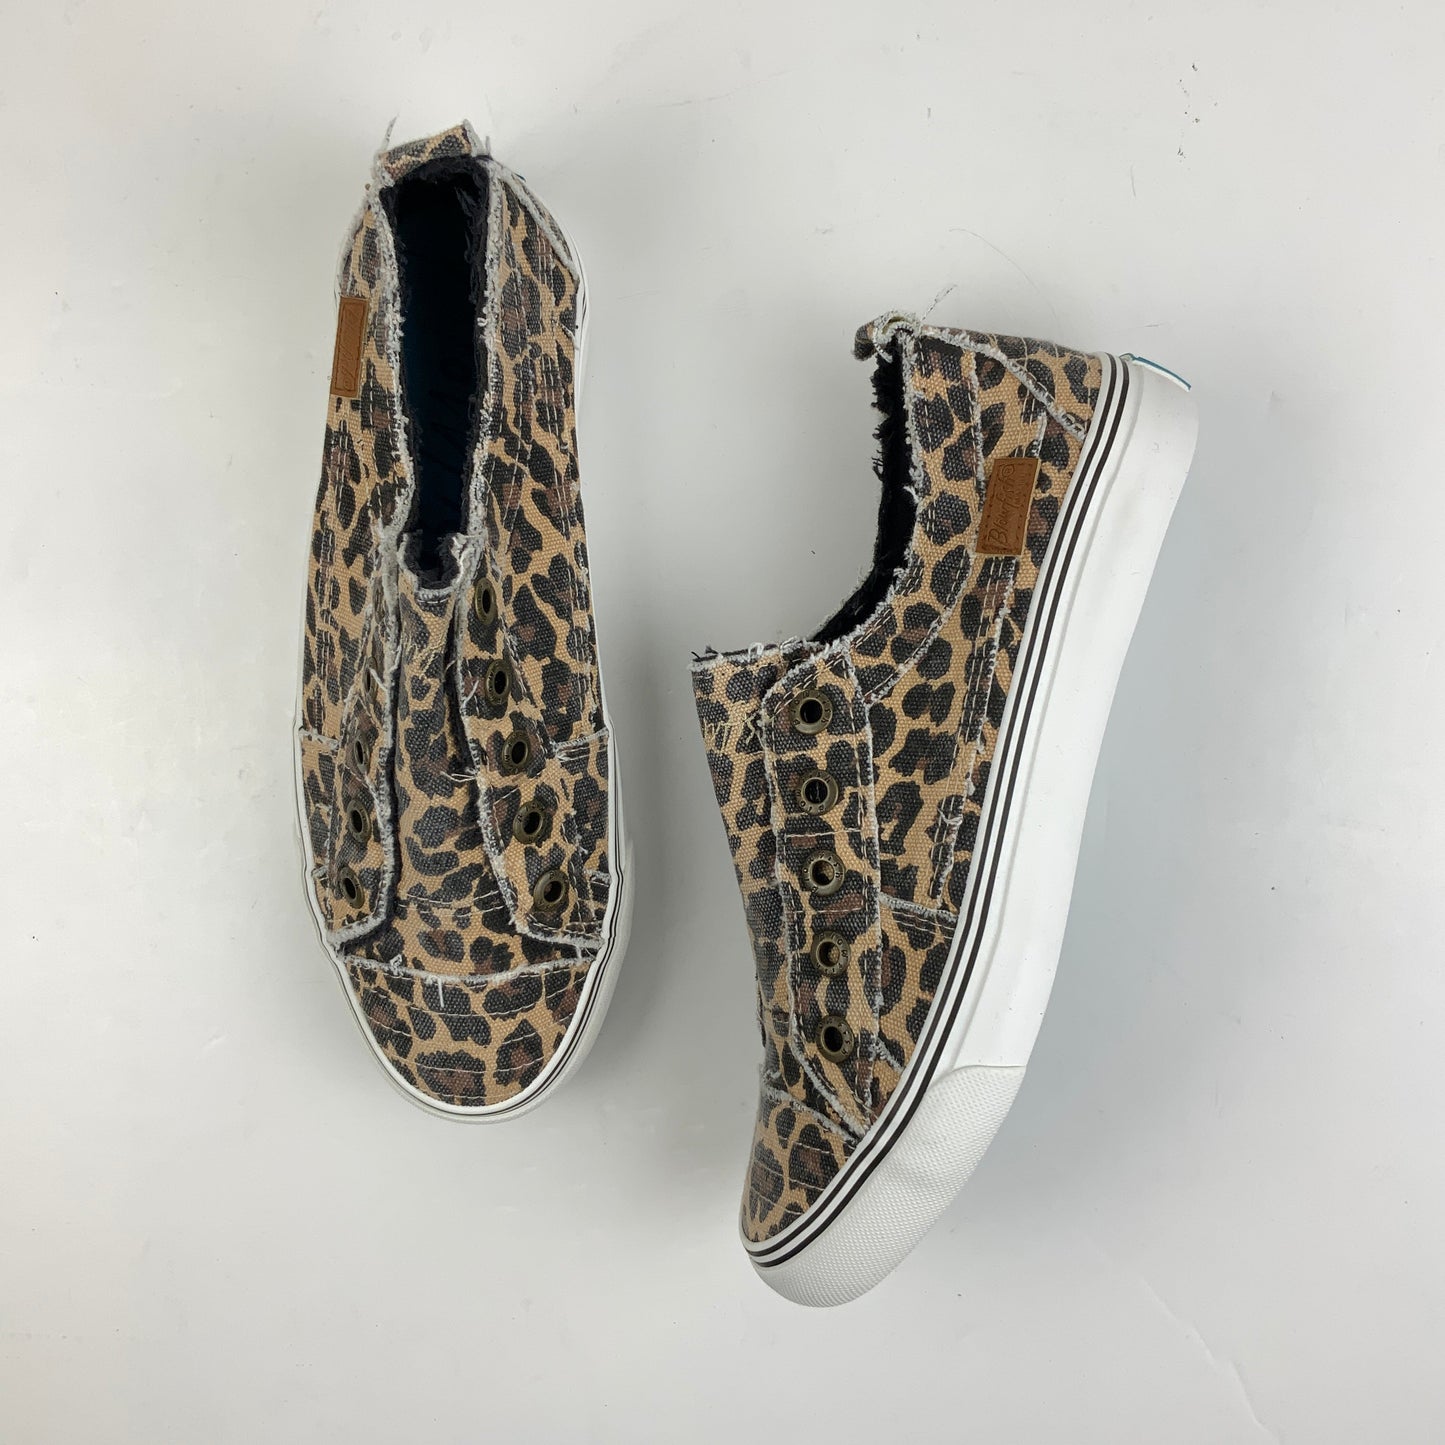 Animal Print Shoes Sneakers Blowfish, Size 8